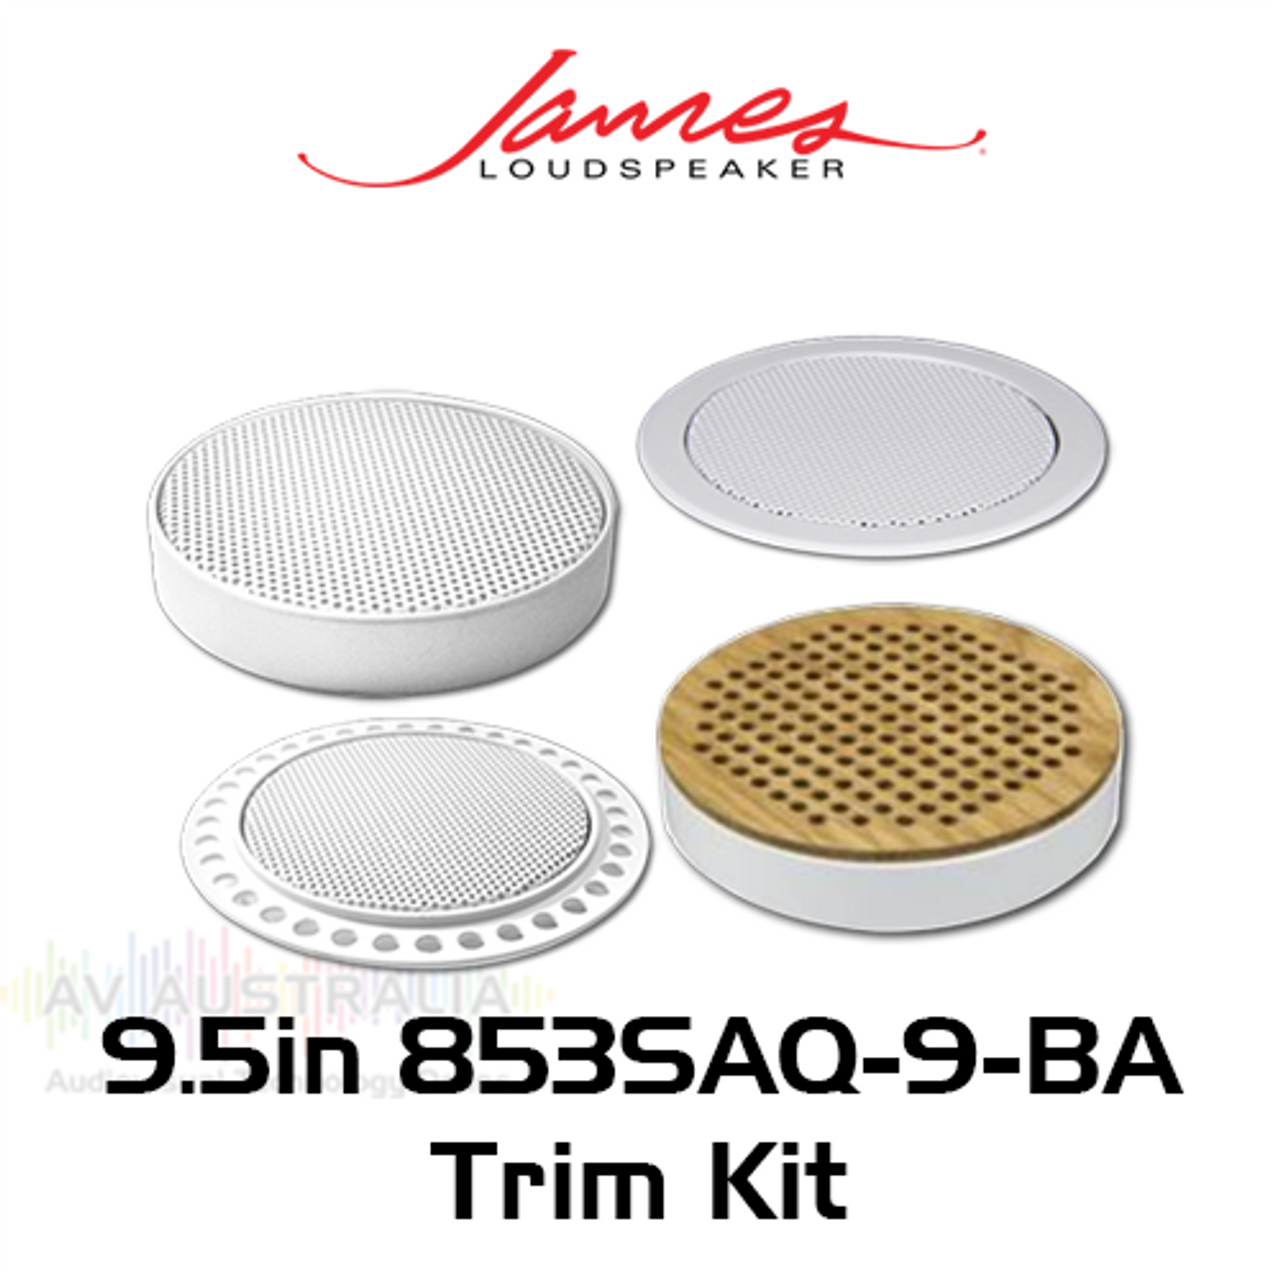 James Loudspeaker 9.5" Round Trim Kit For 853SAQ-9-BA SA Speaker